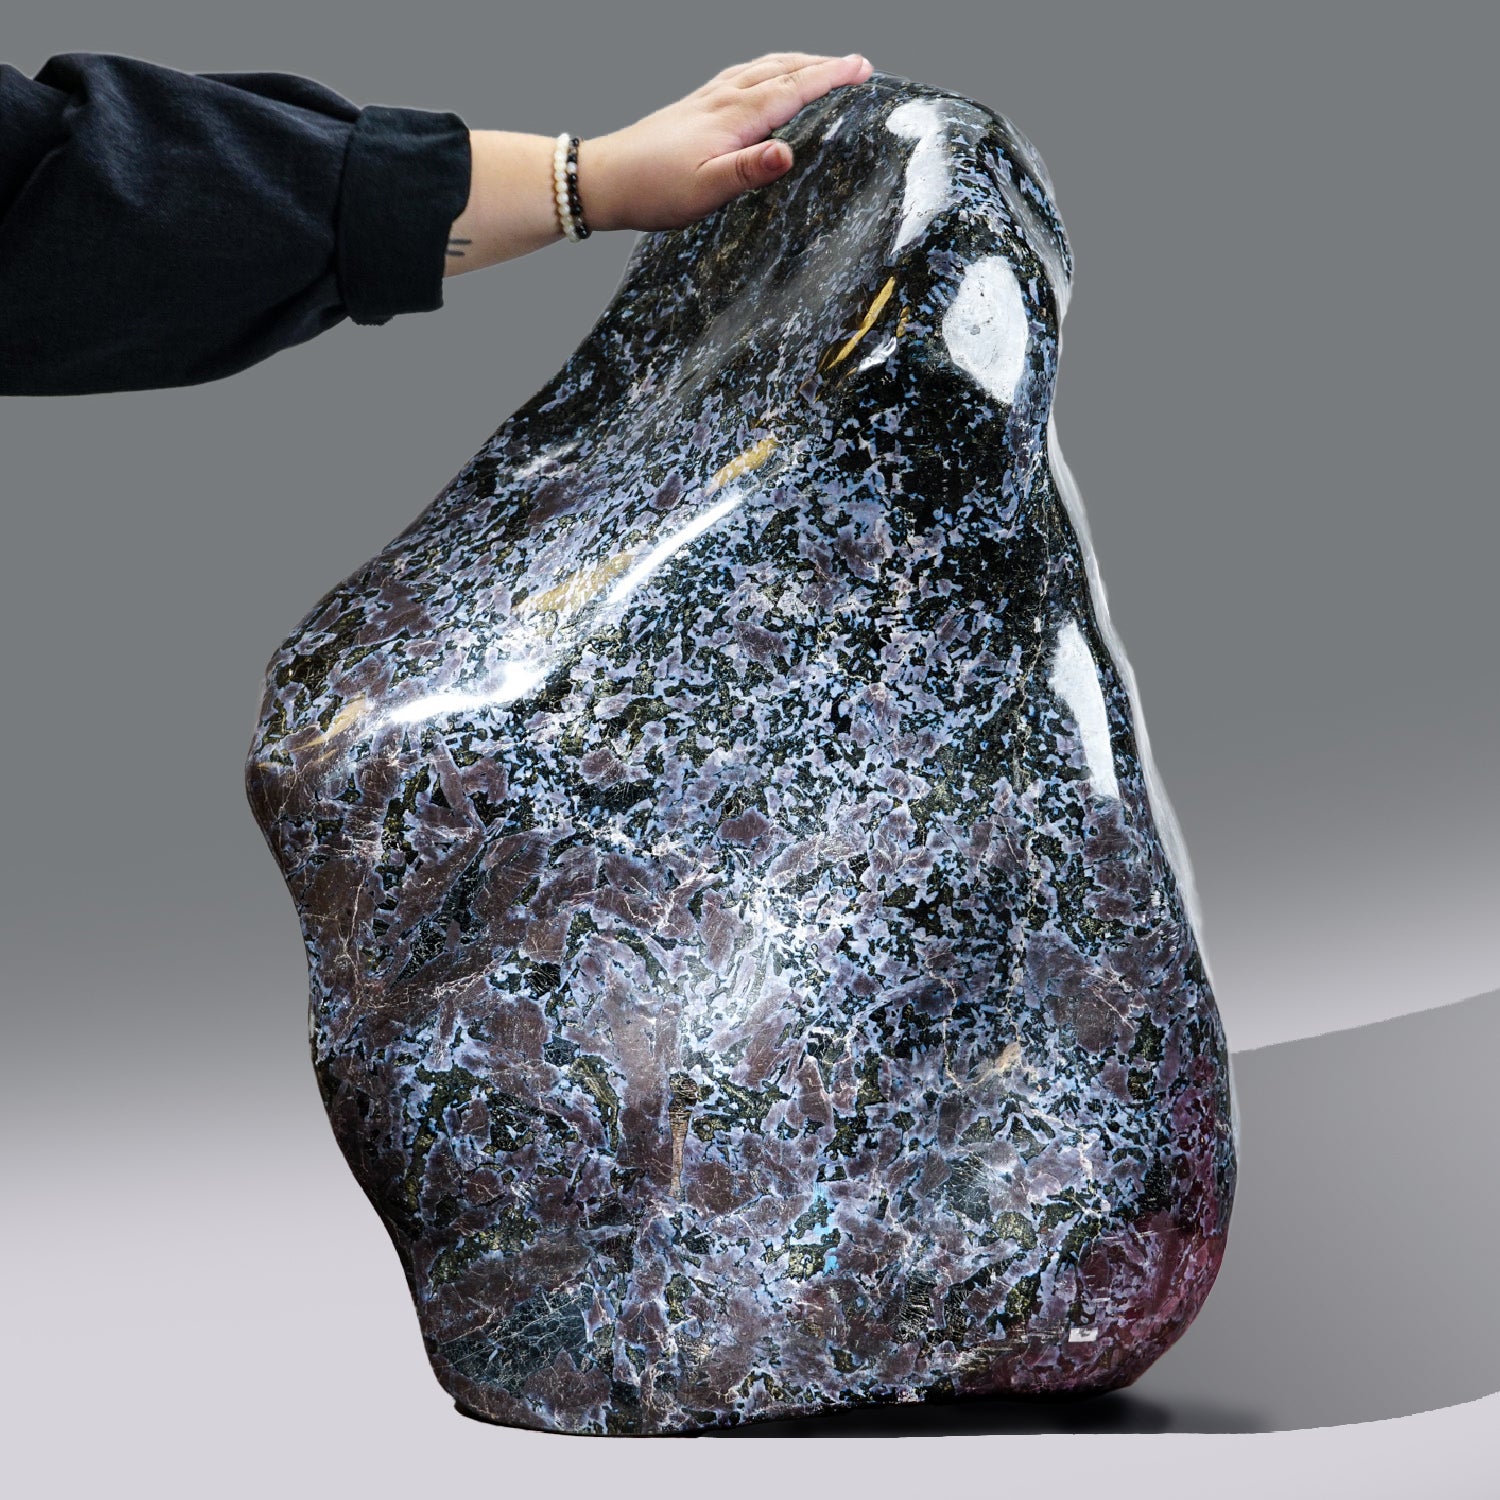 Giant Polished Mystic Merlinite Freeform from Madagascar (294.5 lbs)